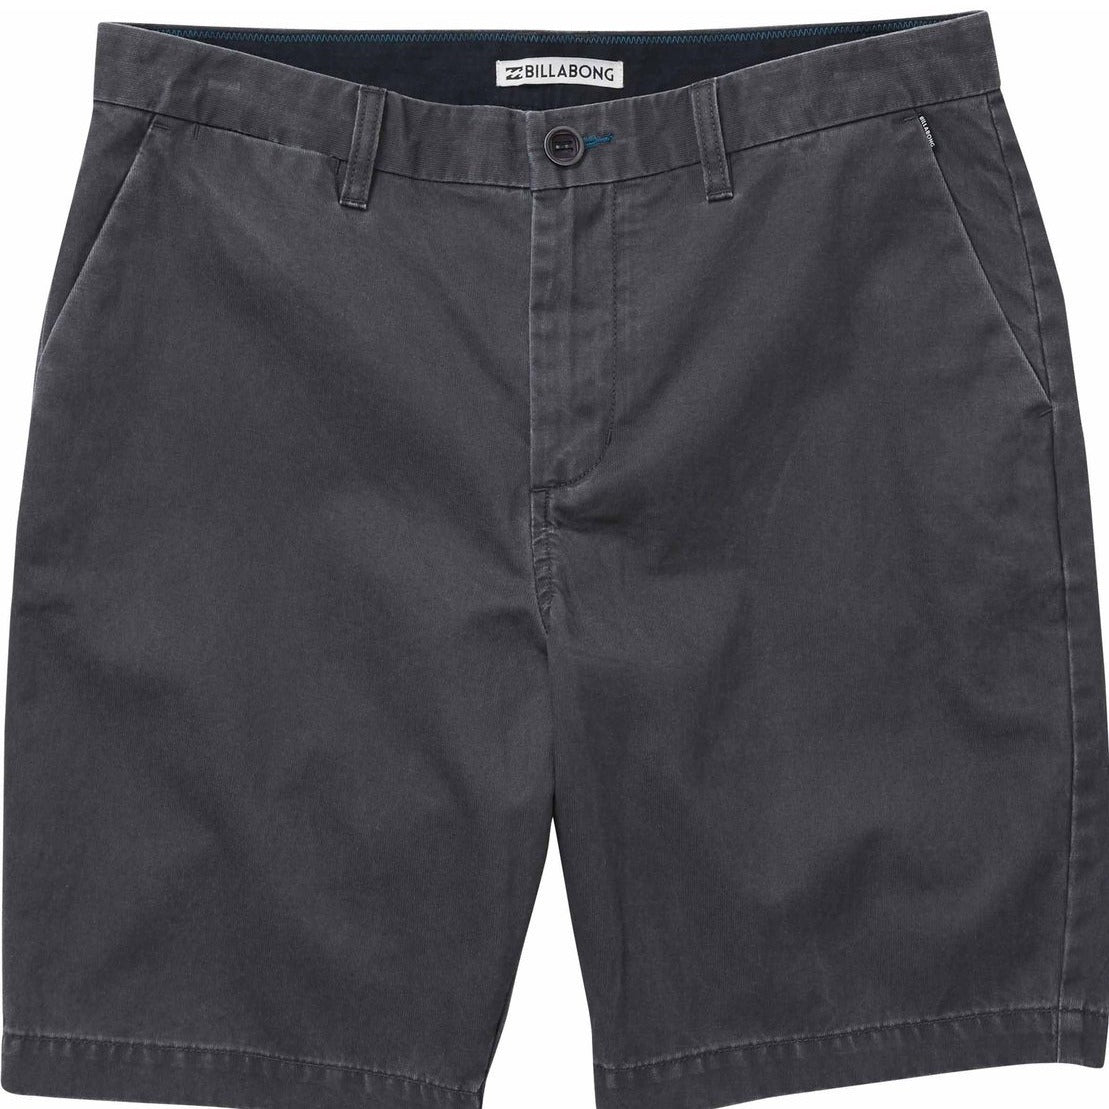 Billabong New Order Bedford Shorts